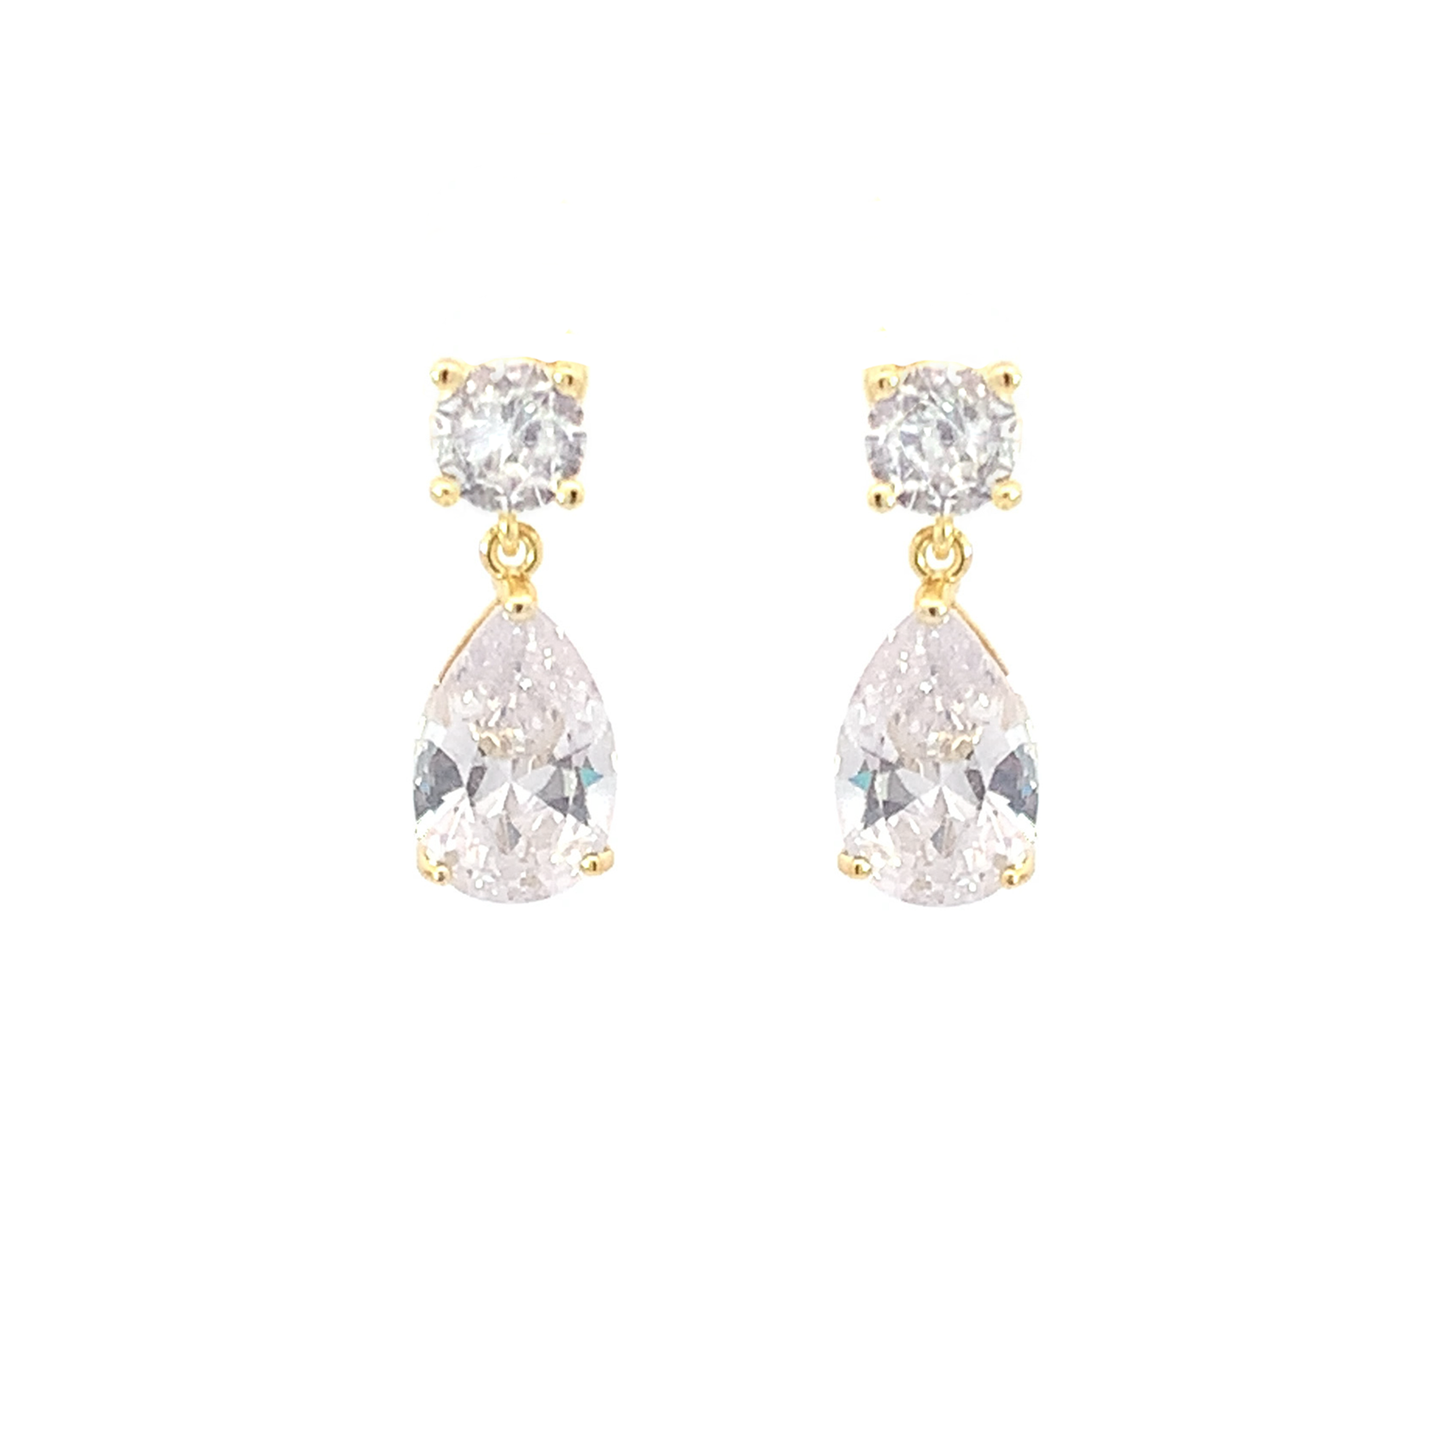 April birthstone crystal stud earrings gold